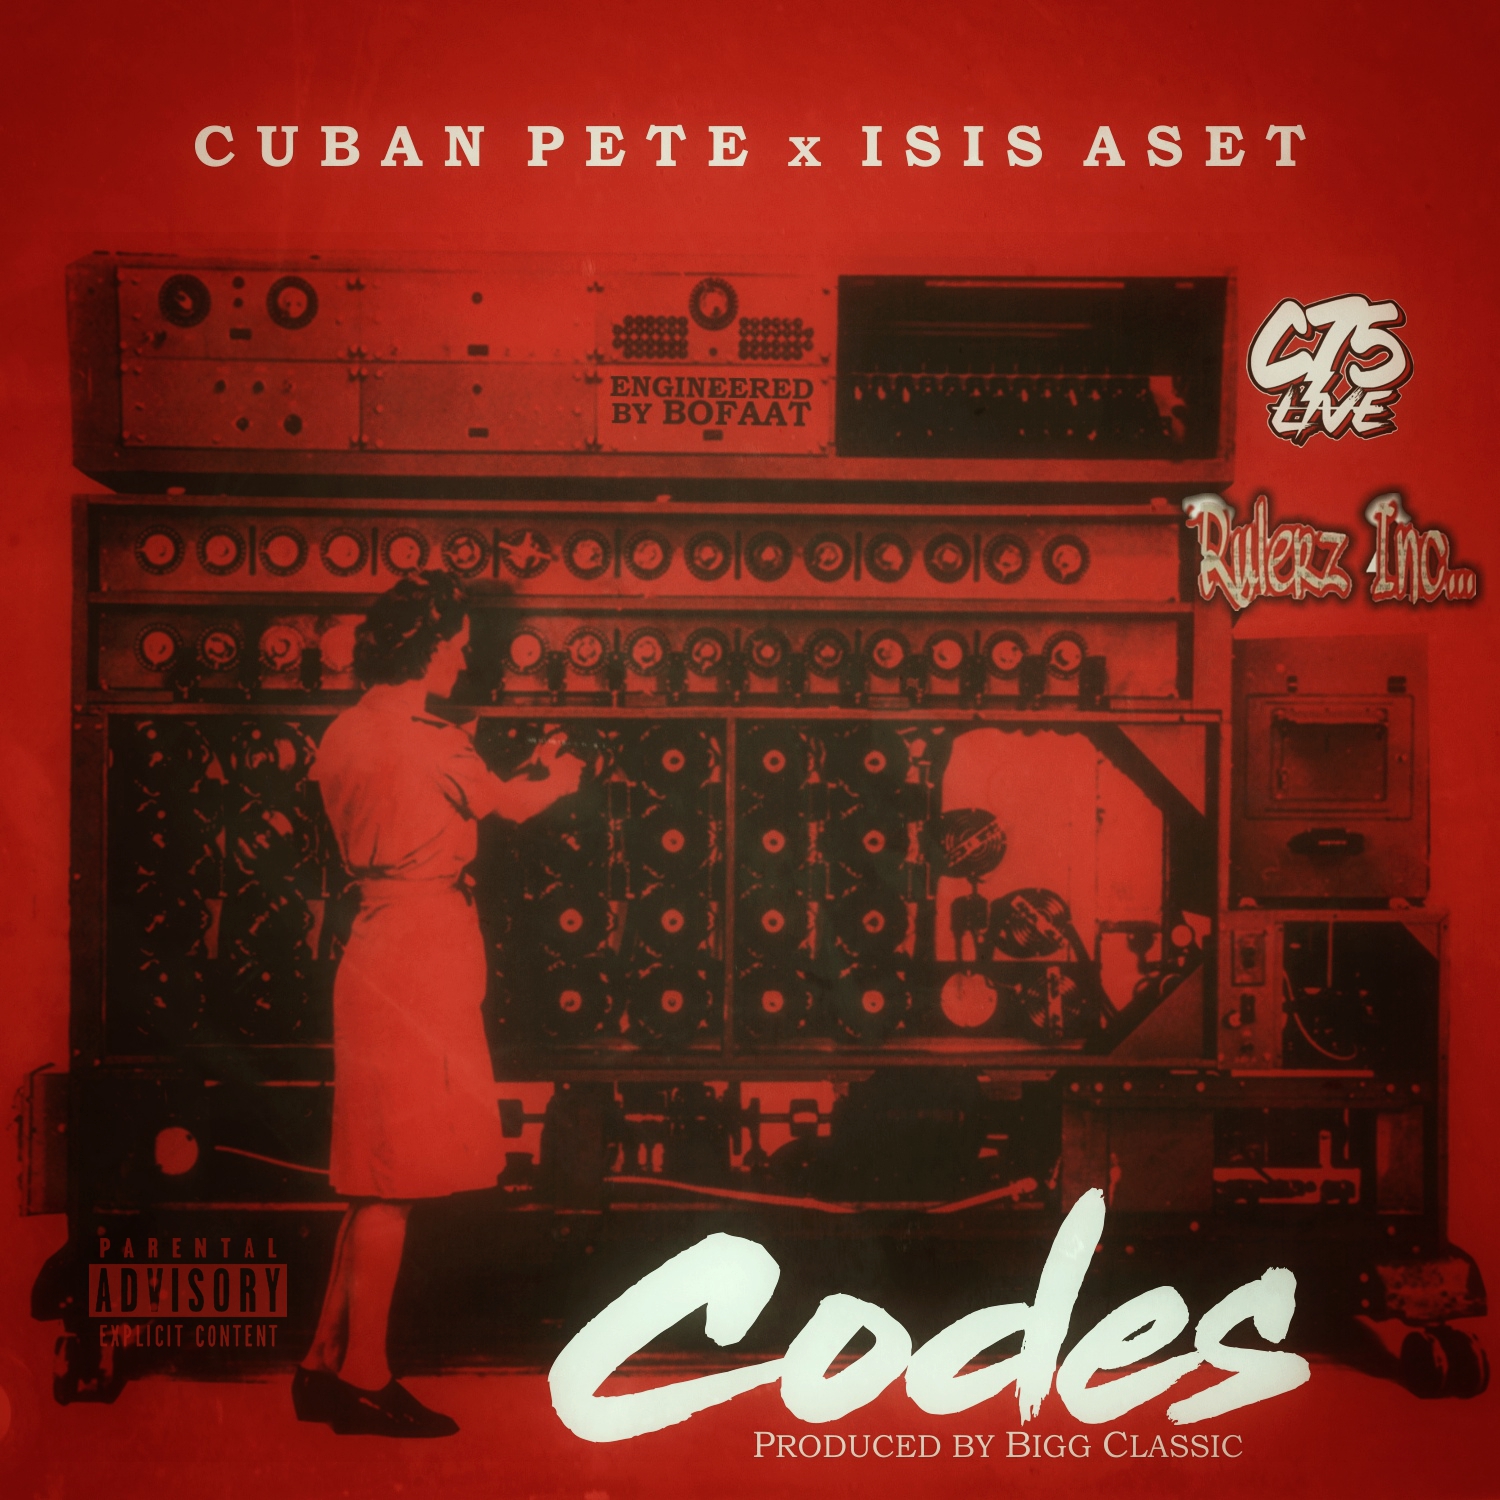 Cuban Pete, Isis Aset, & Bigg Classic Crack The "Codes"